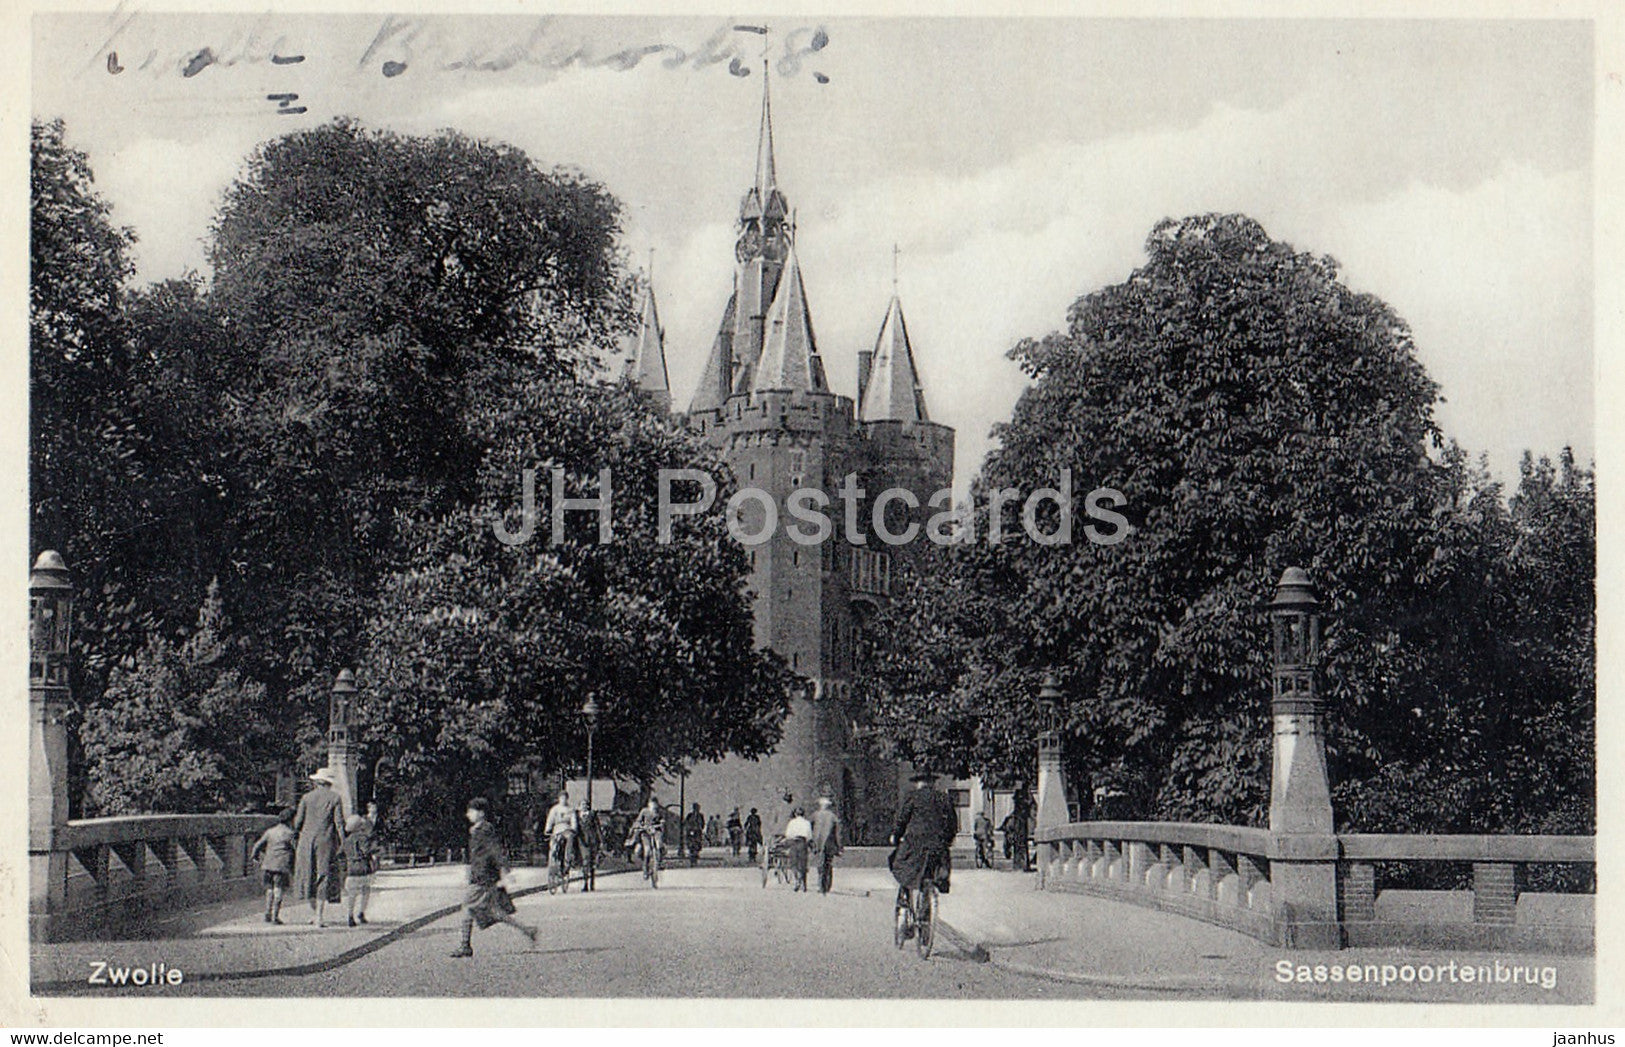 Zwolle - Sassenpoortenbrug - bridge - old postcard - 1913 - Netherlands - used - JH Postcards